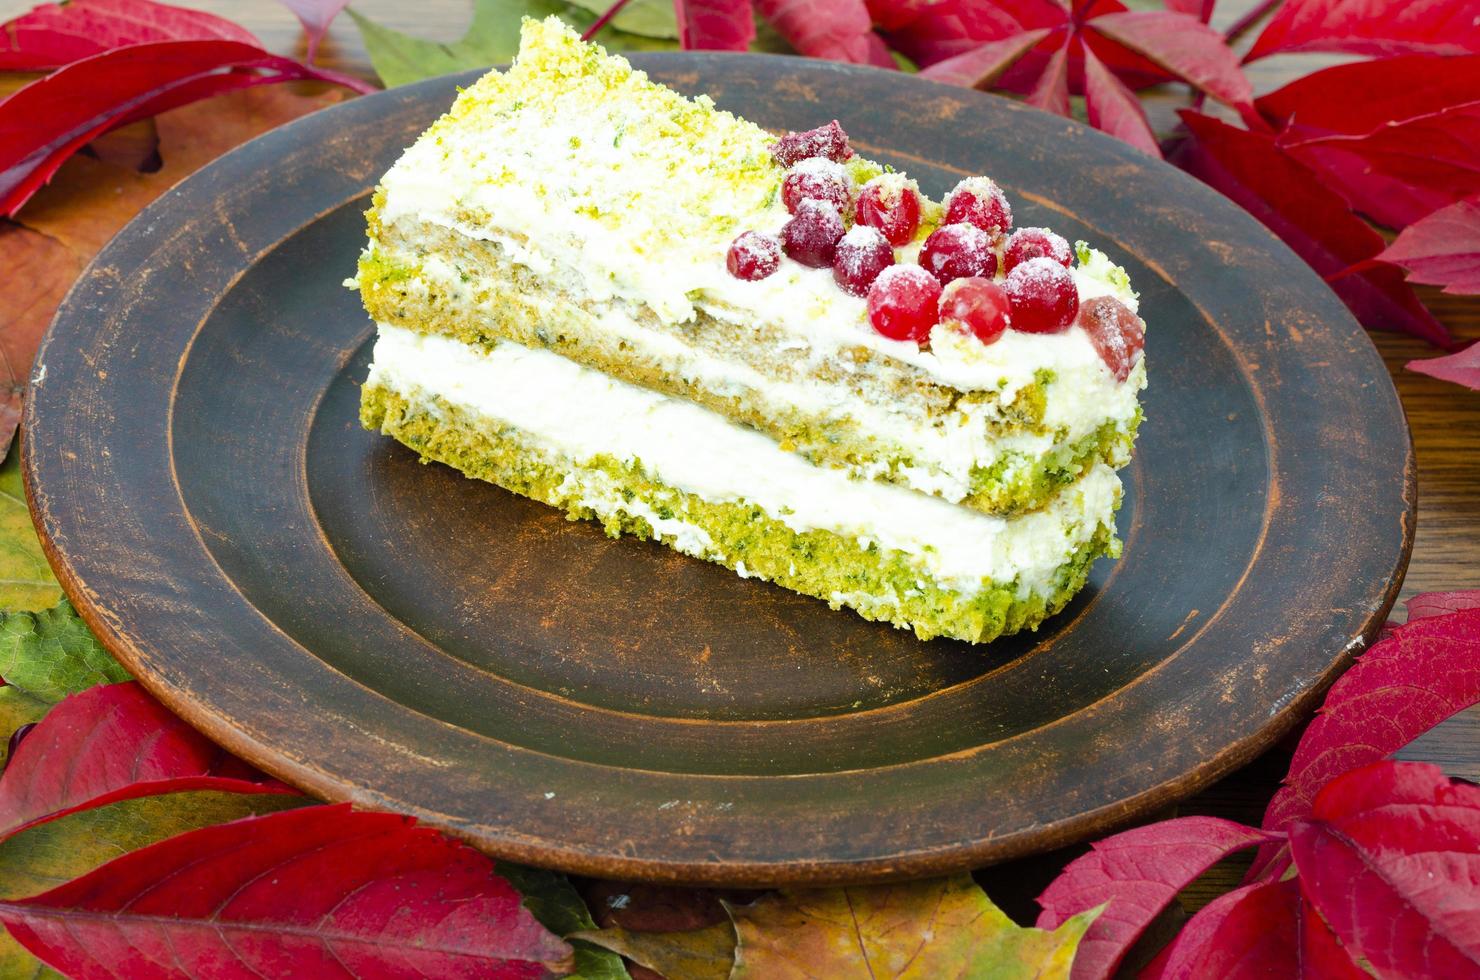 Piece of sponge cake with cream and berries on plate. Studio Photo